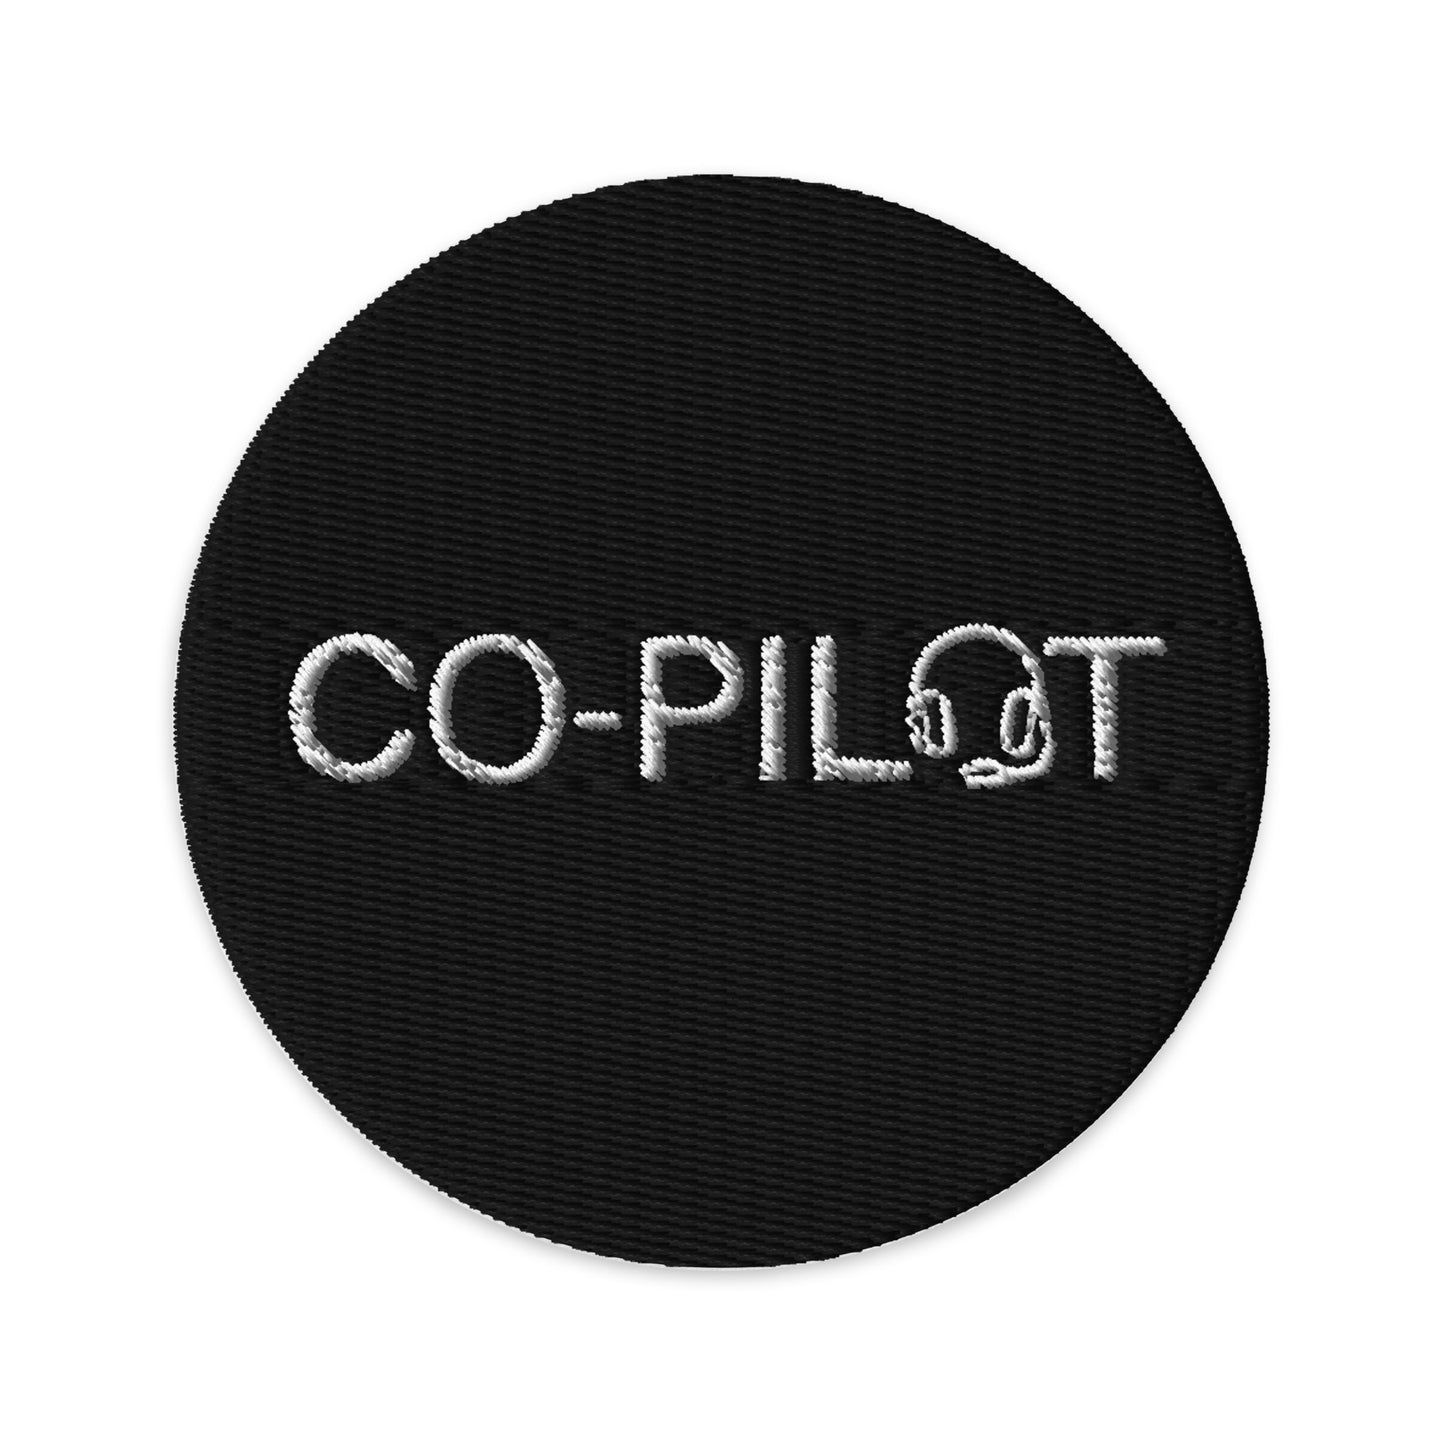 Co-Pilot Round Patch